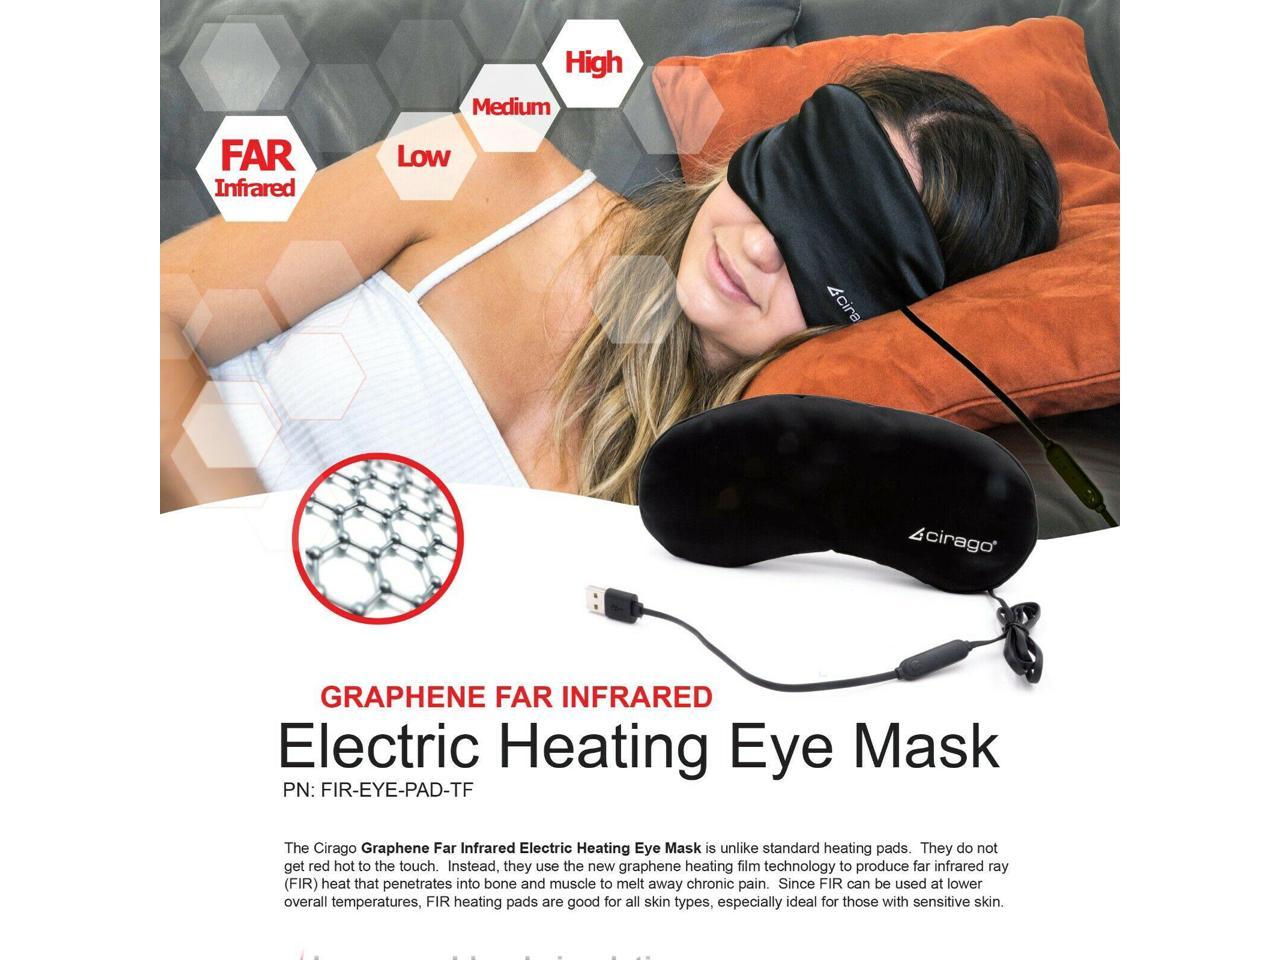 Cirago Graphene Far Infrared Heating Eye Mask for Dry Eyes, Refreshed Tired Eyes